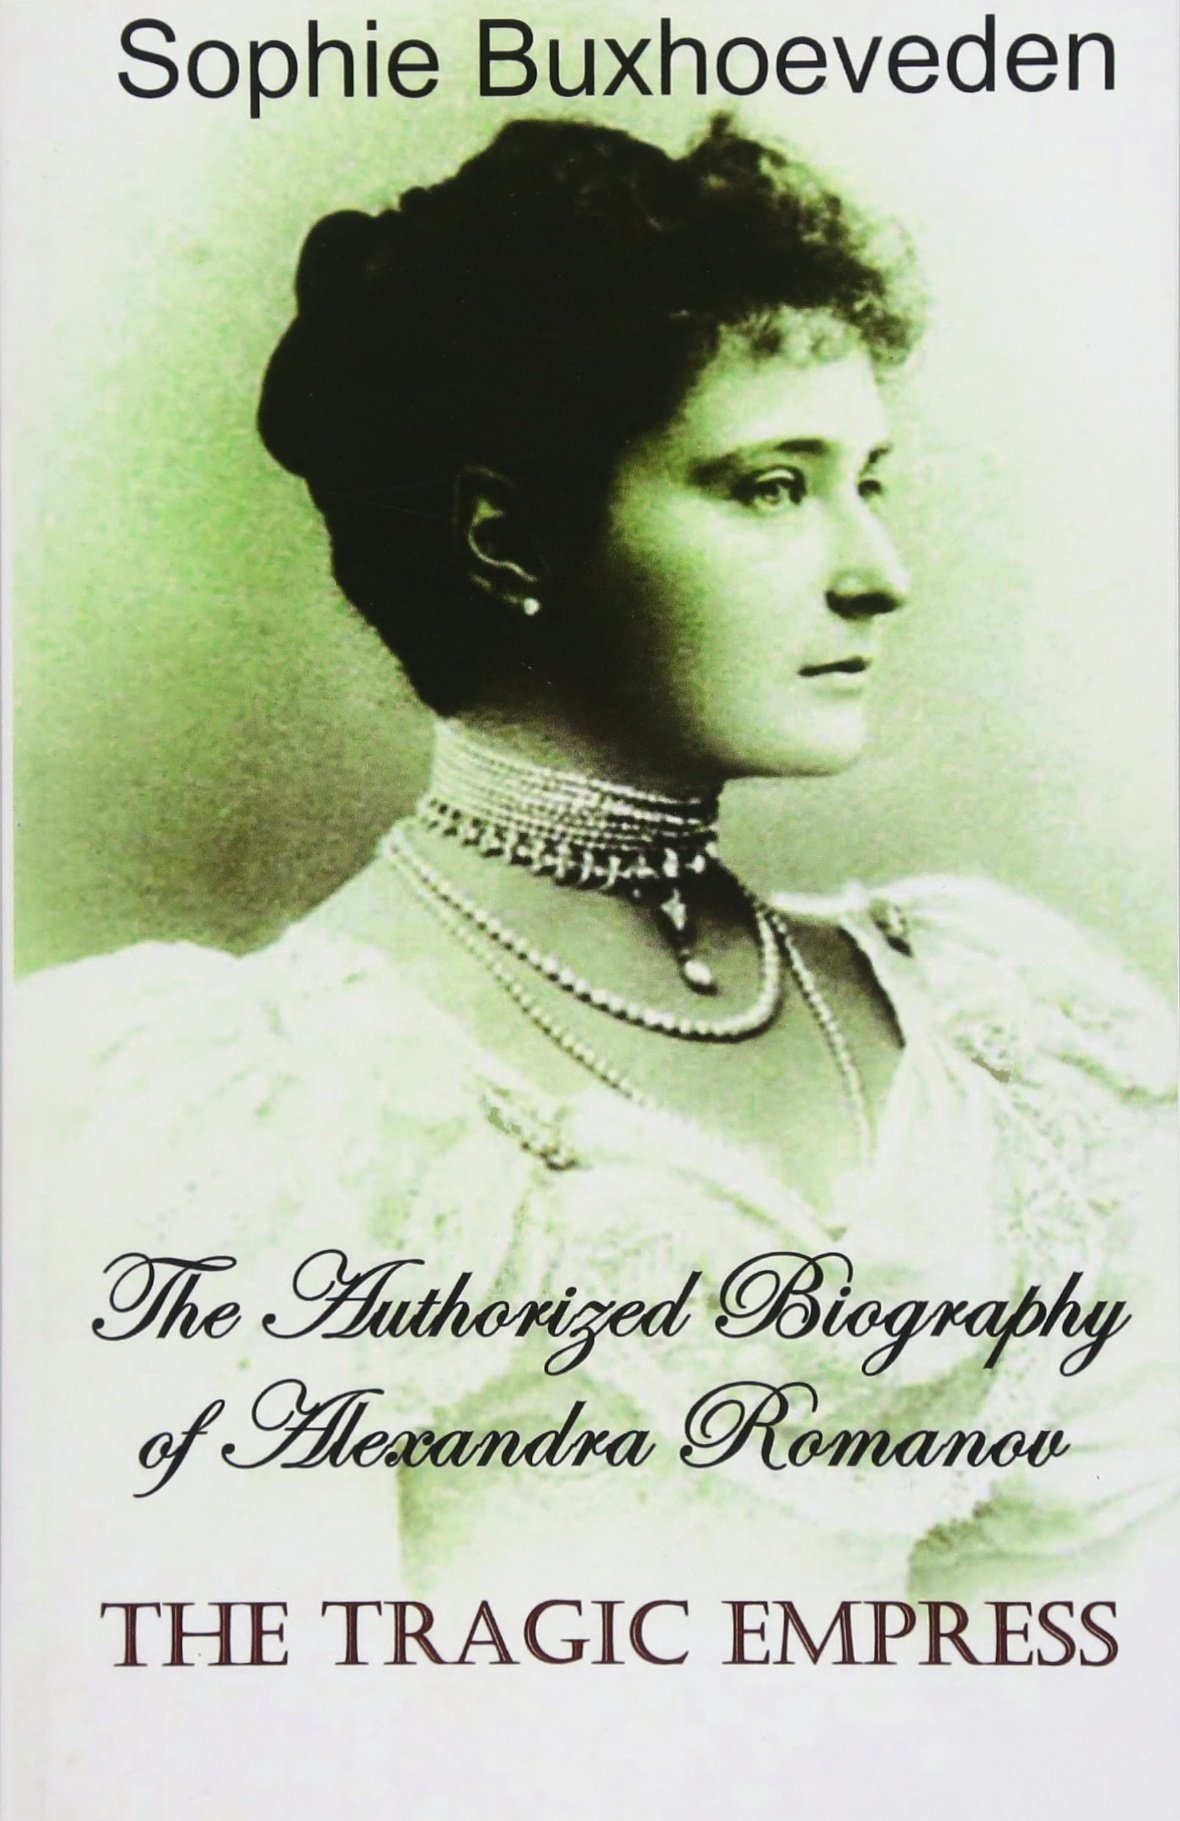 The Tragic Empress: The Authorized Biography of Alexandra Romanov